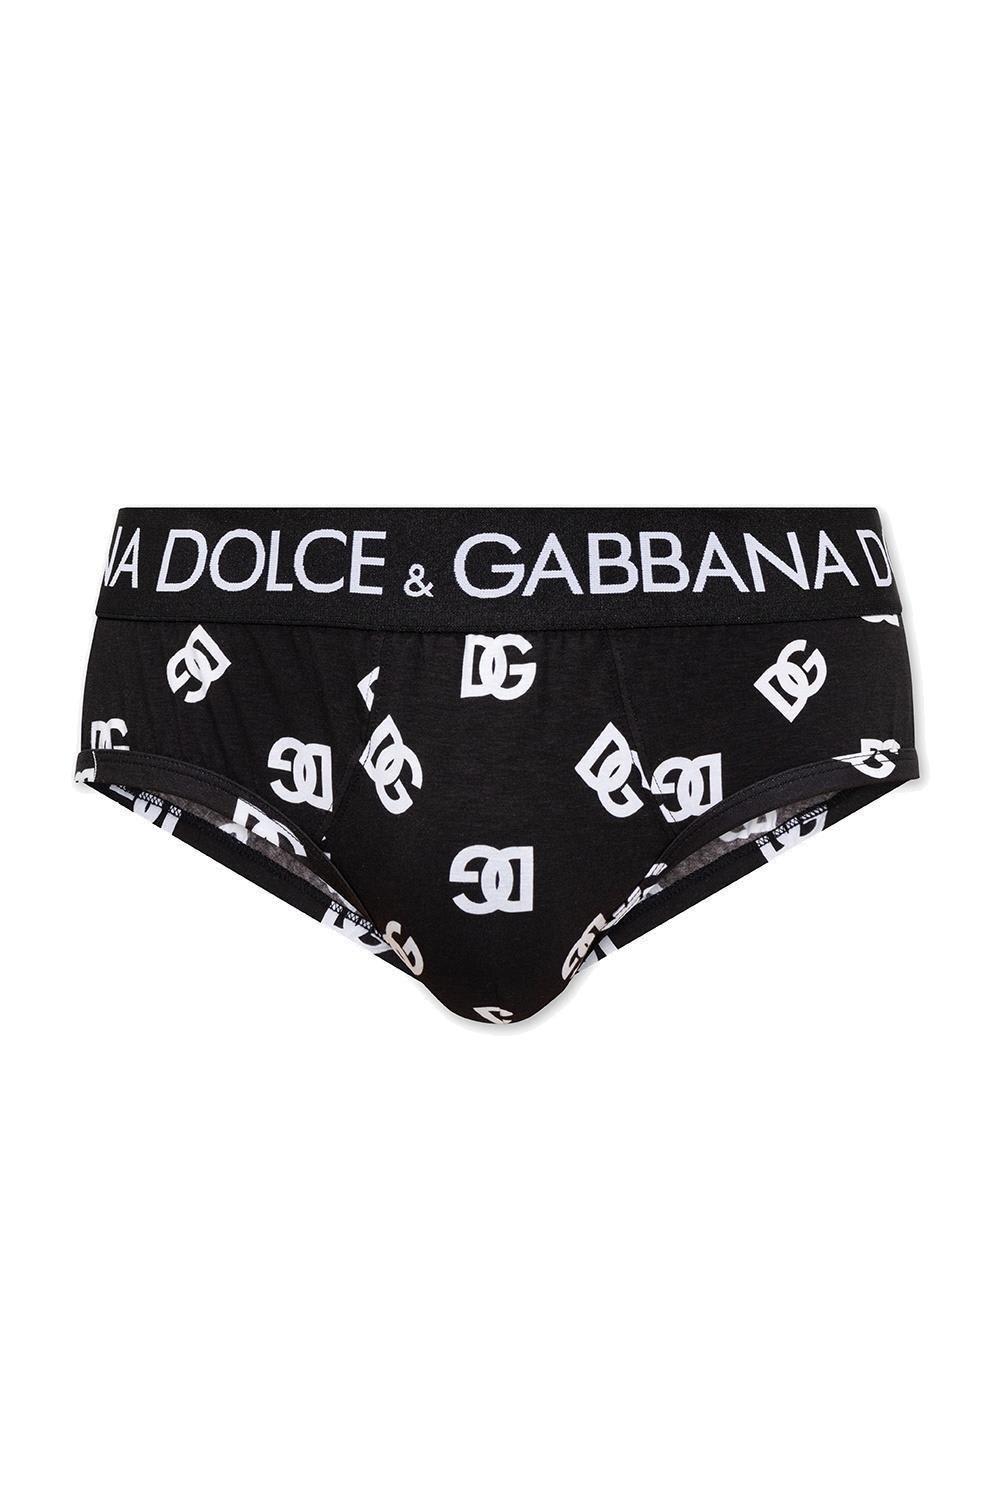 Dolce & Gabbana Allover Dg Brando Briefs